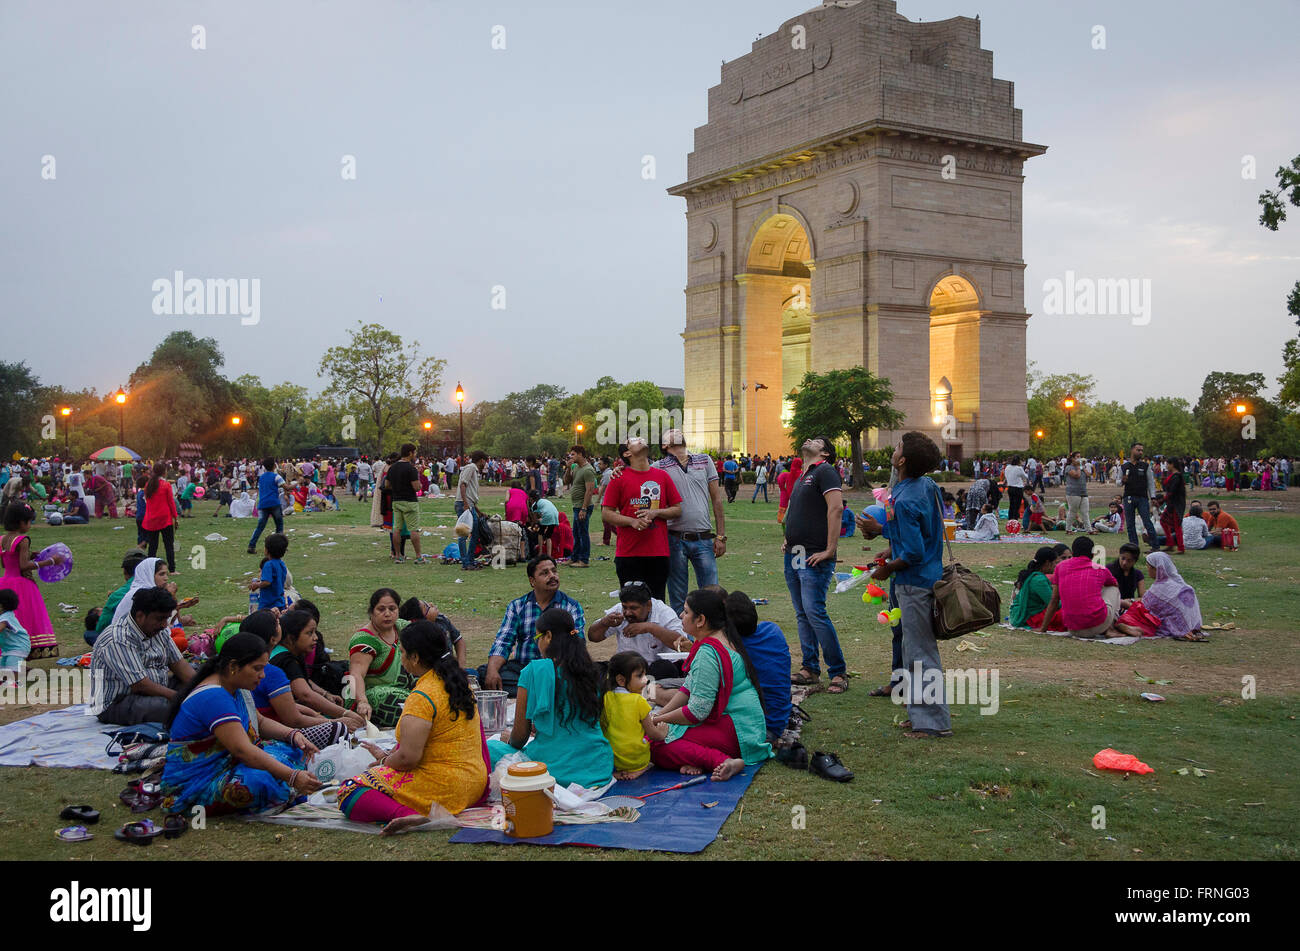 India Gate, Delhi, India Foto Stock